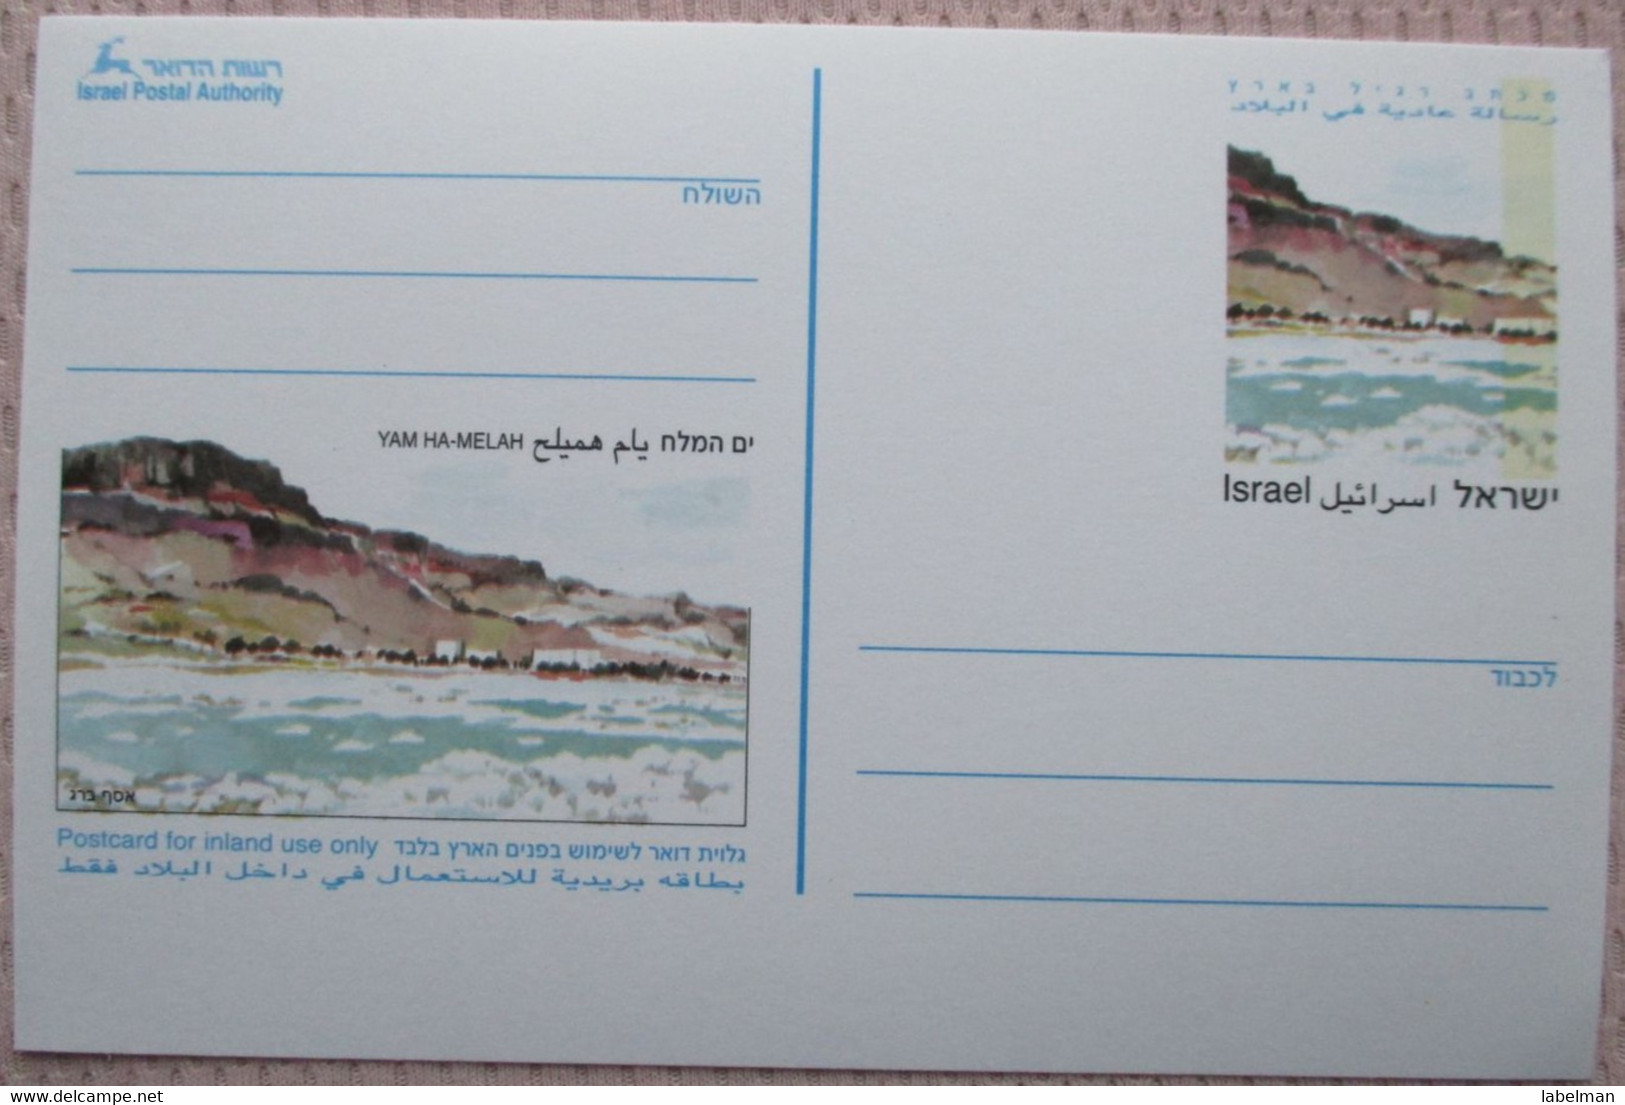 ISRAEL POSTAL AUTHORITY DEAD SEA DESERT INLAND PREPAID POSTCARD POSTKARTE CARD ANSICHTSKARTE CARTOLINA CARTE POSTALE PC - Maximumkarten